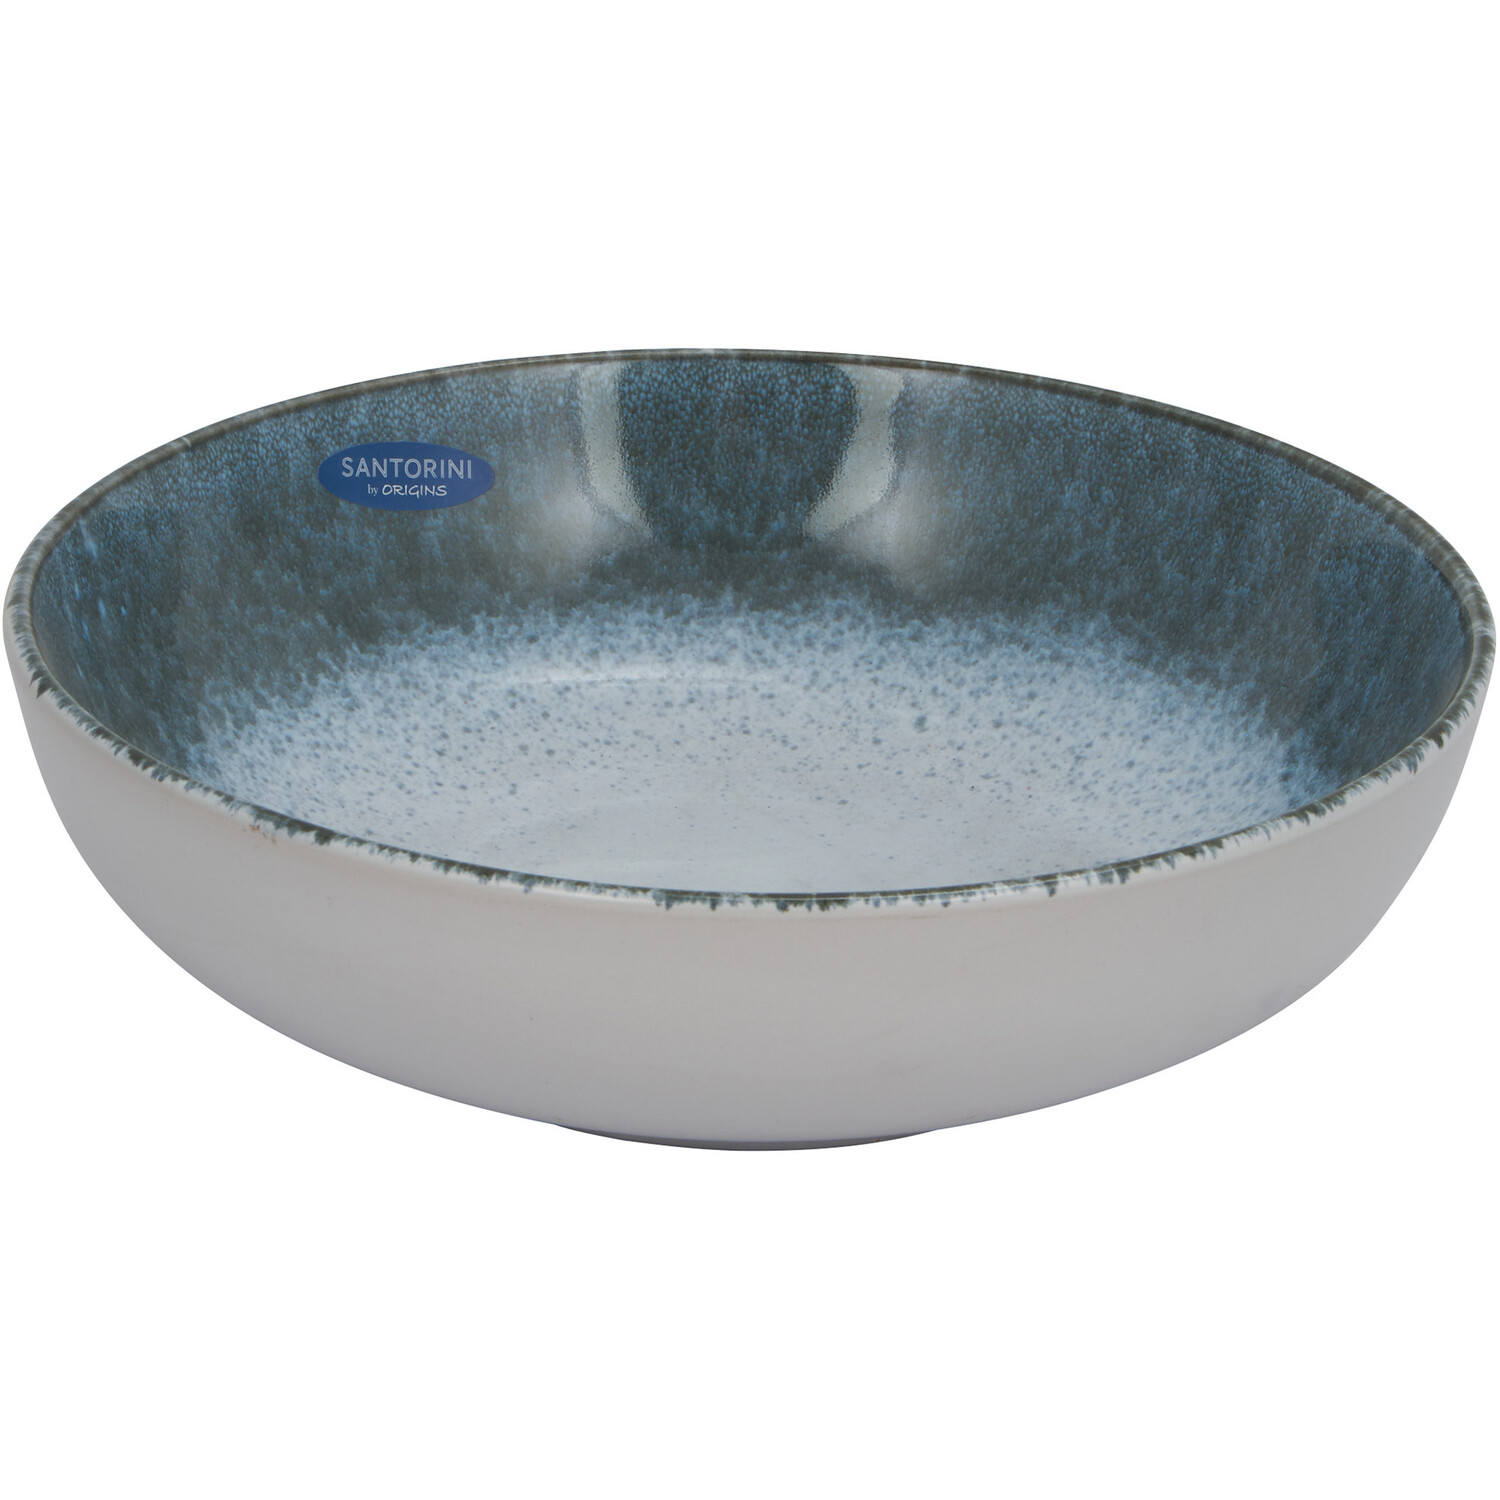 Santorini Reactive Glaze Serving Bowl - Blue Image 2